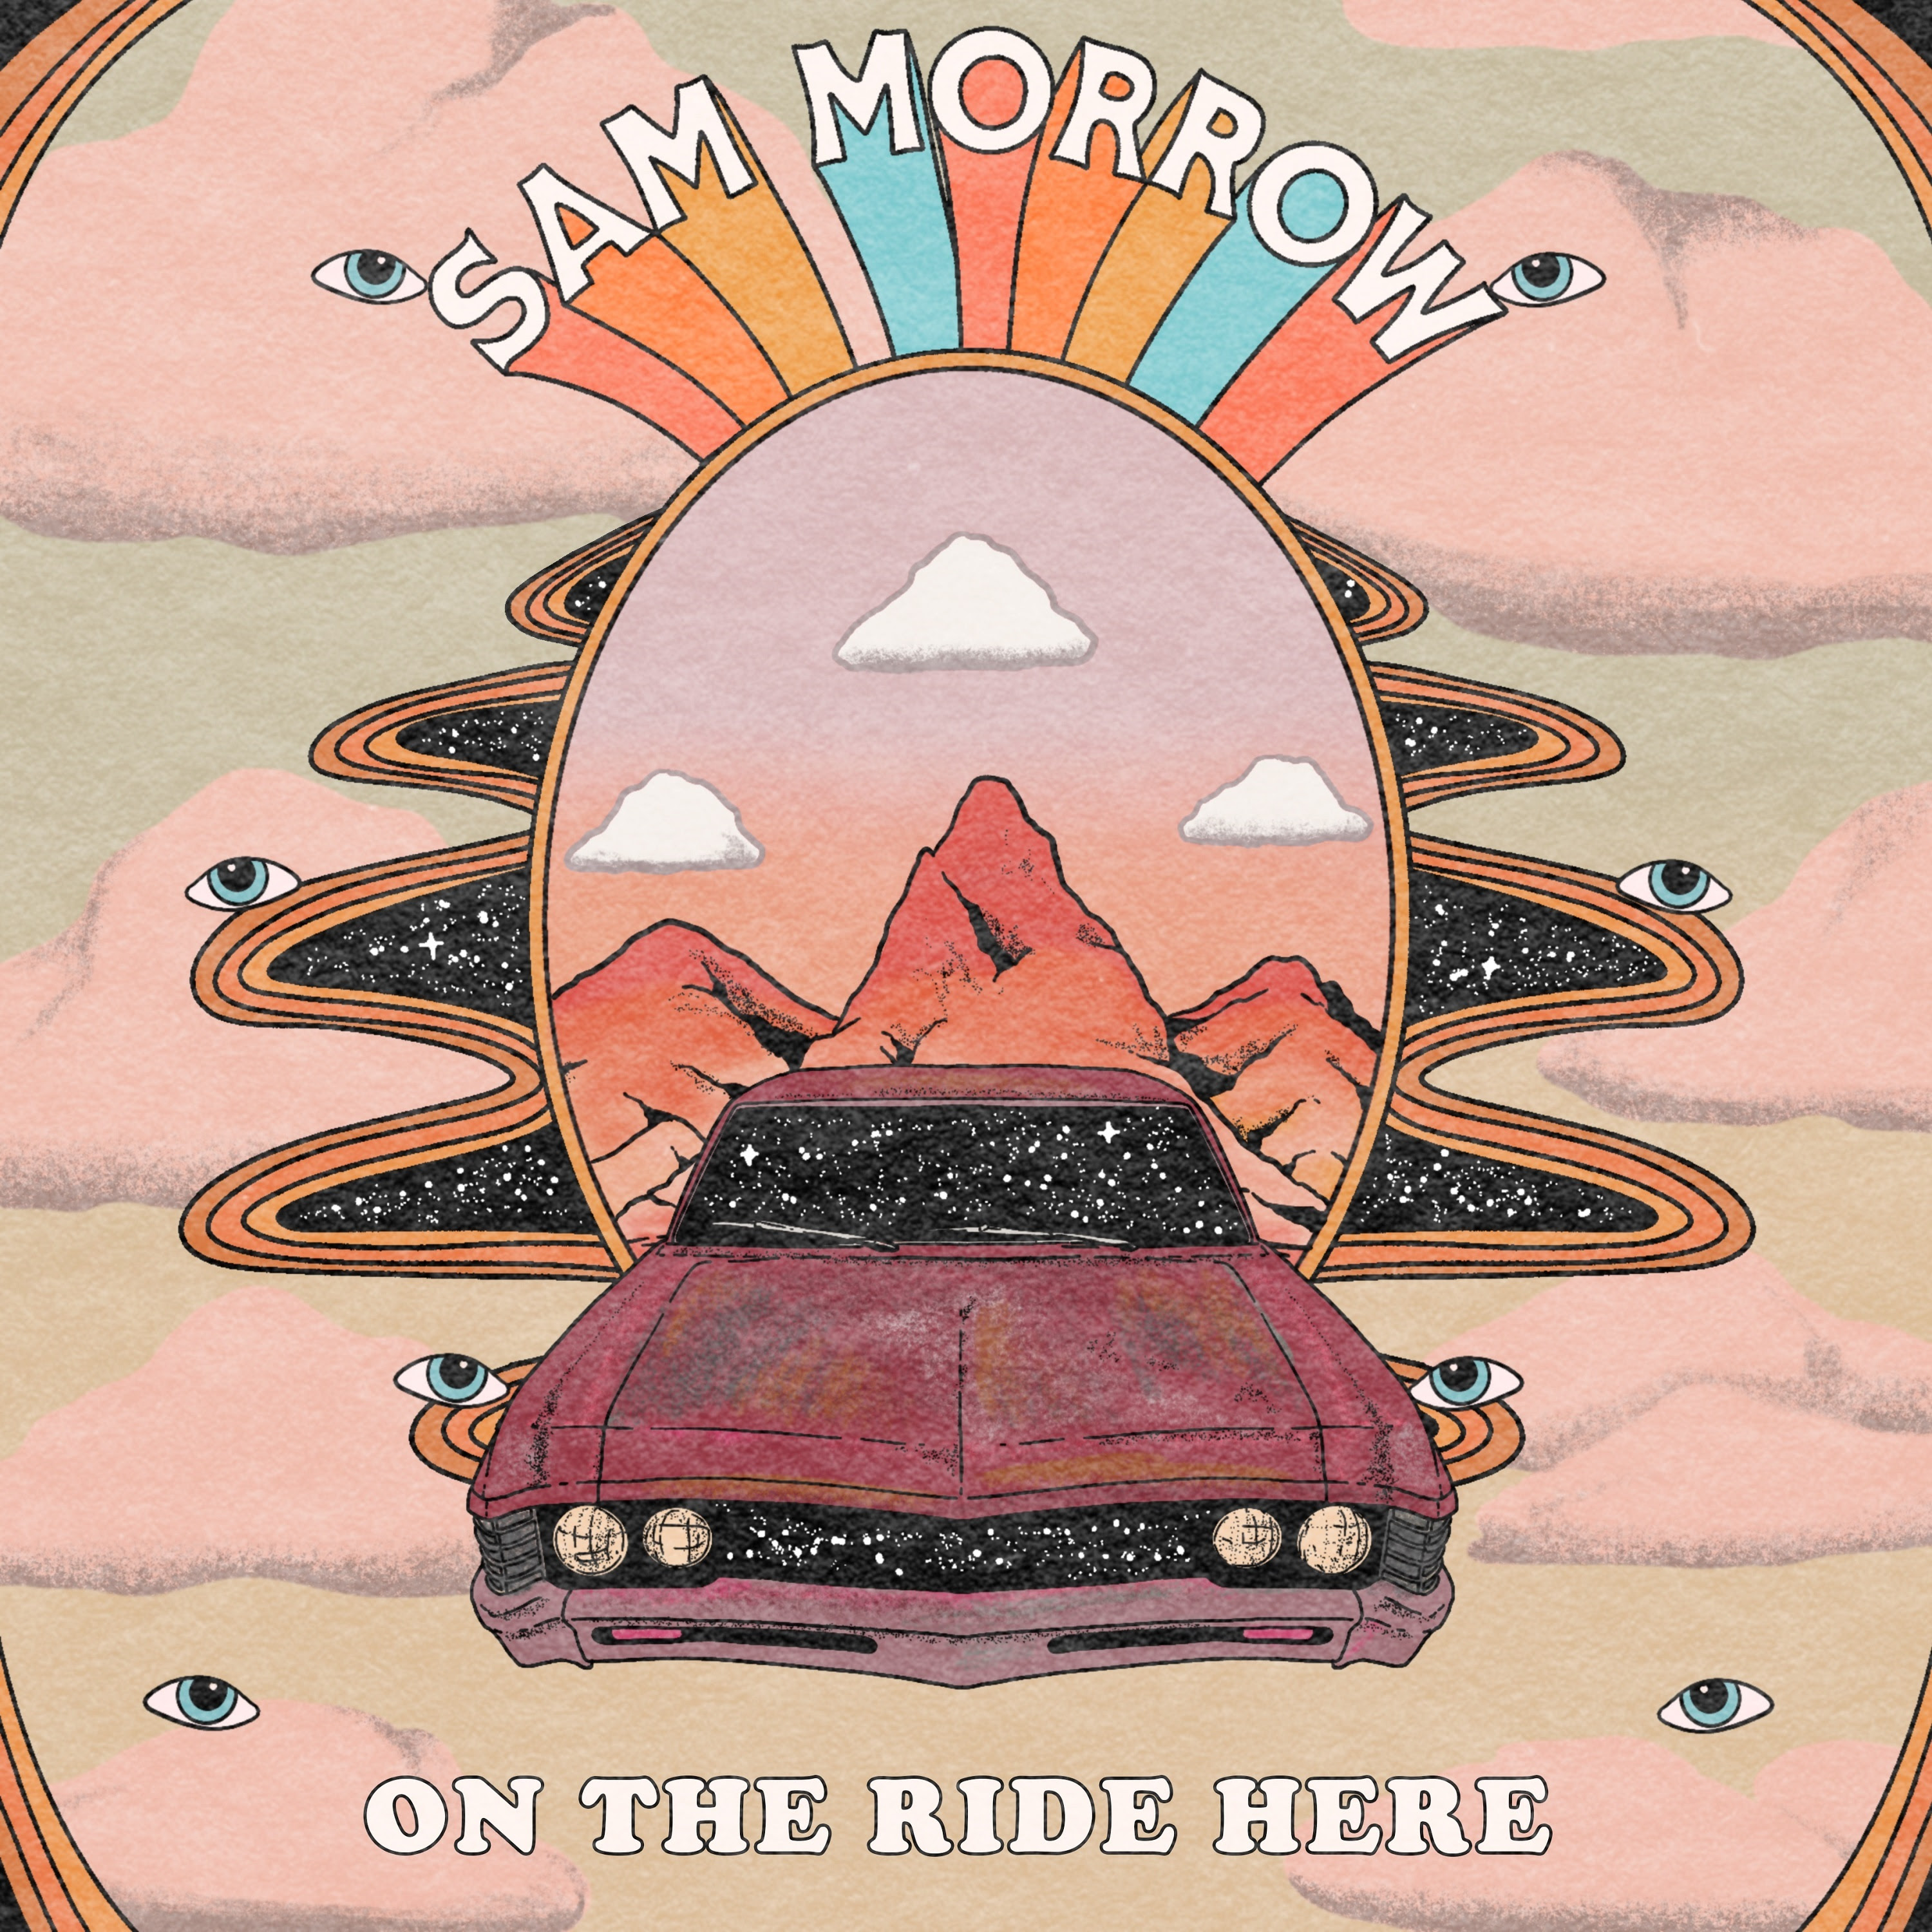 Sam Morrow Announces New Album & New Single